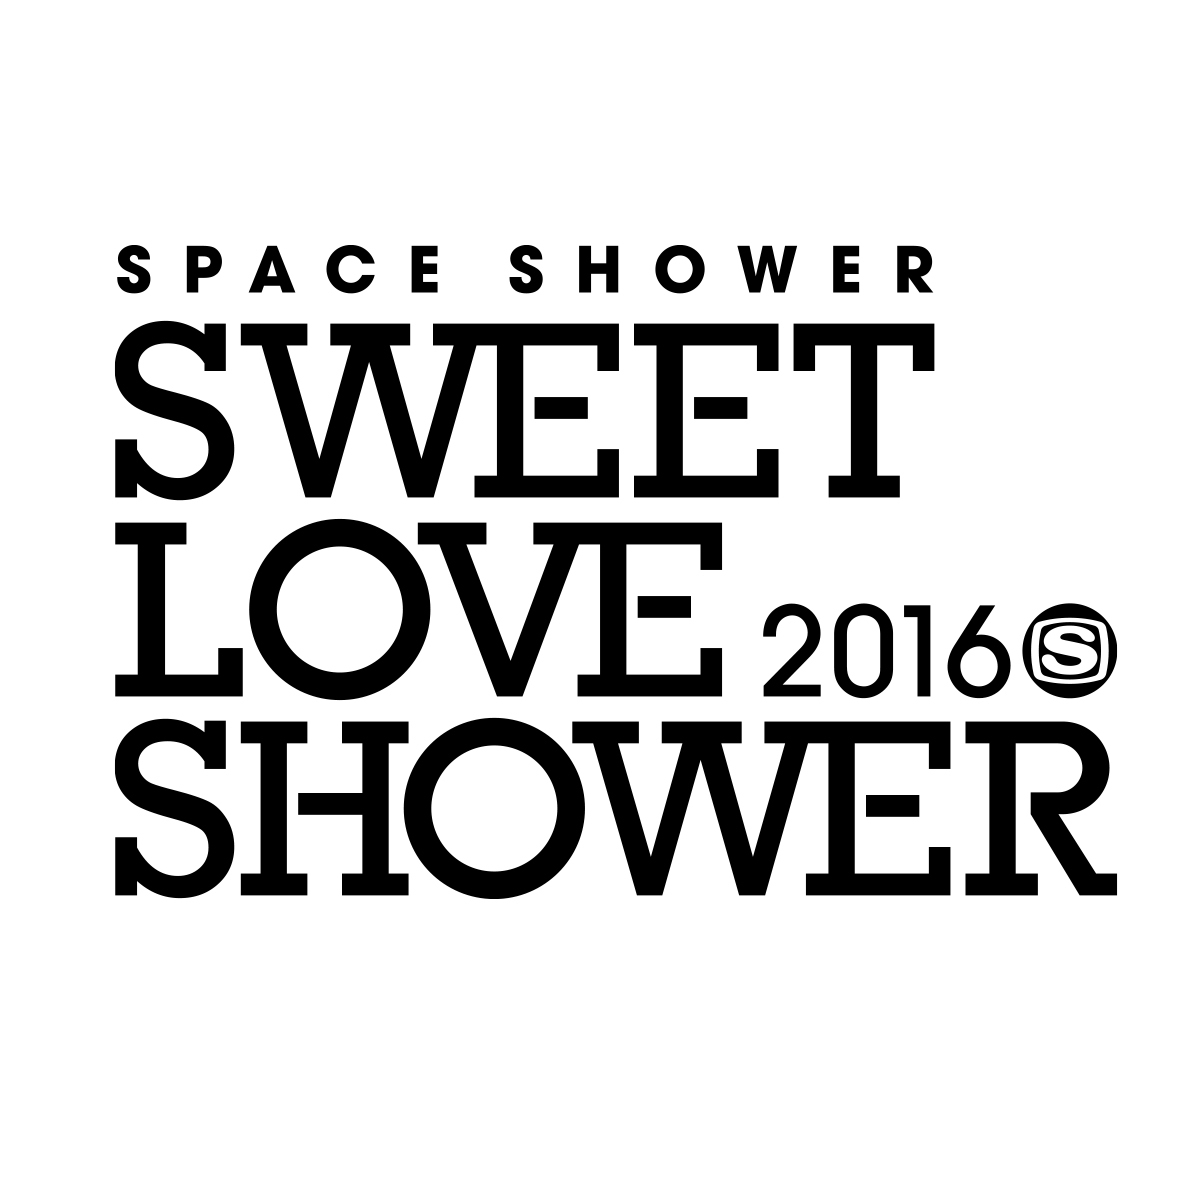  SPACE SHOWER SWEET LOVE SHOWER 2016